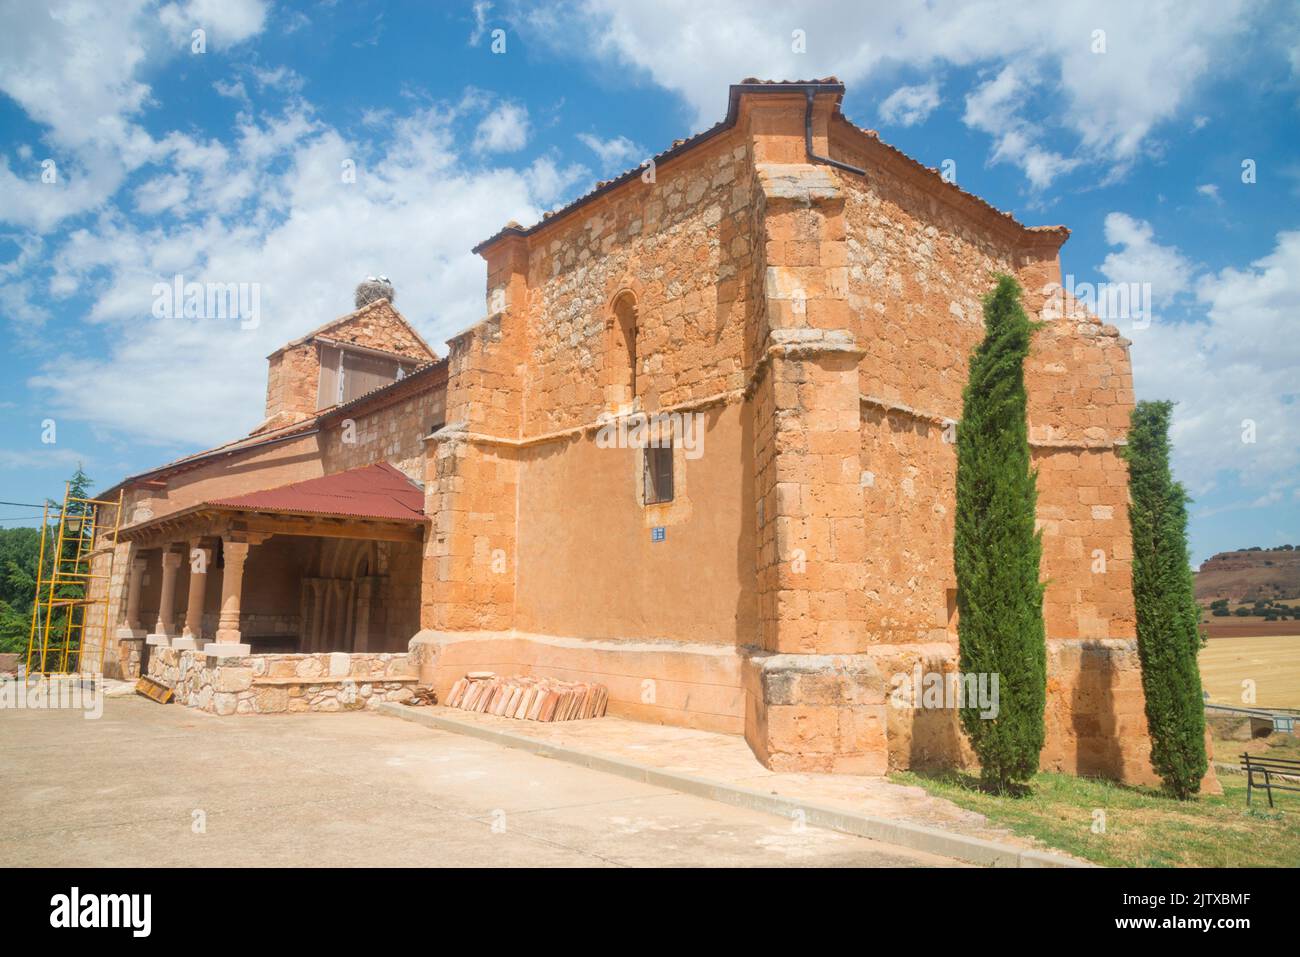 Facade of the church. Mazagatos, Segovia province, Castilla Leon, Spain. Stock Photo